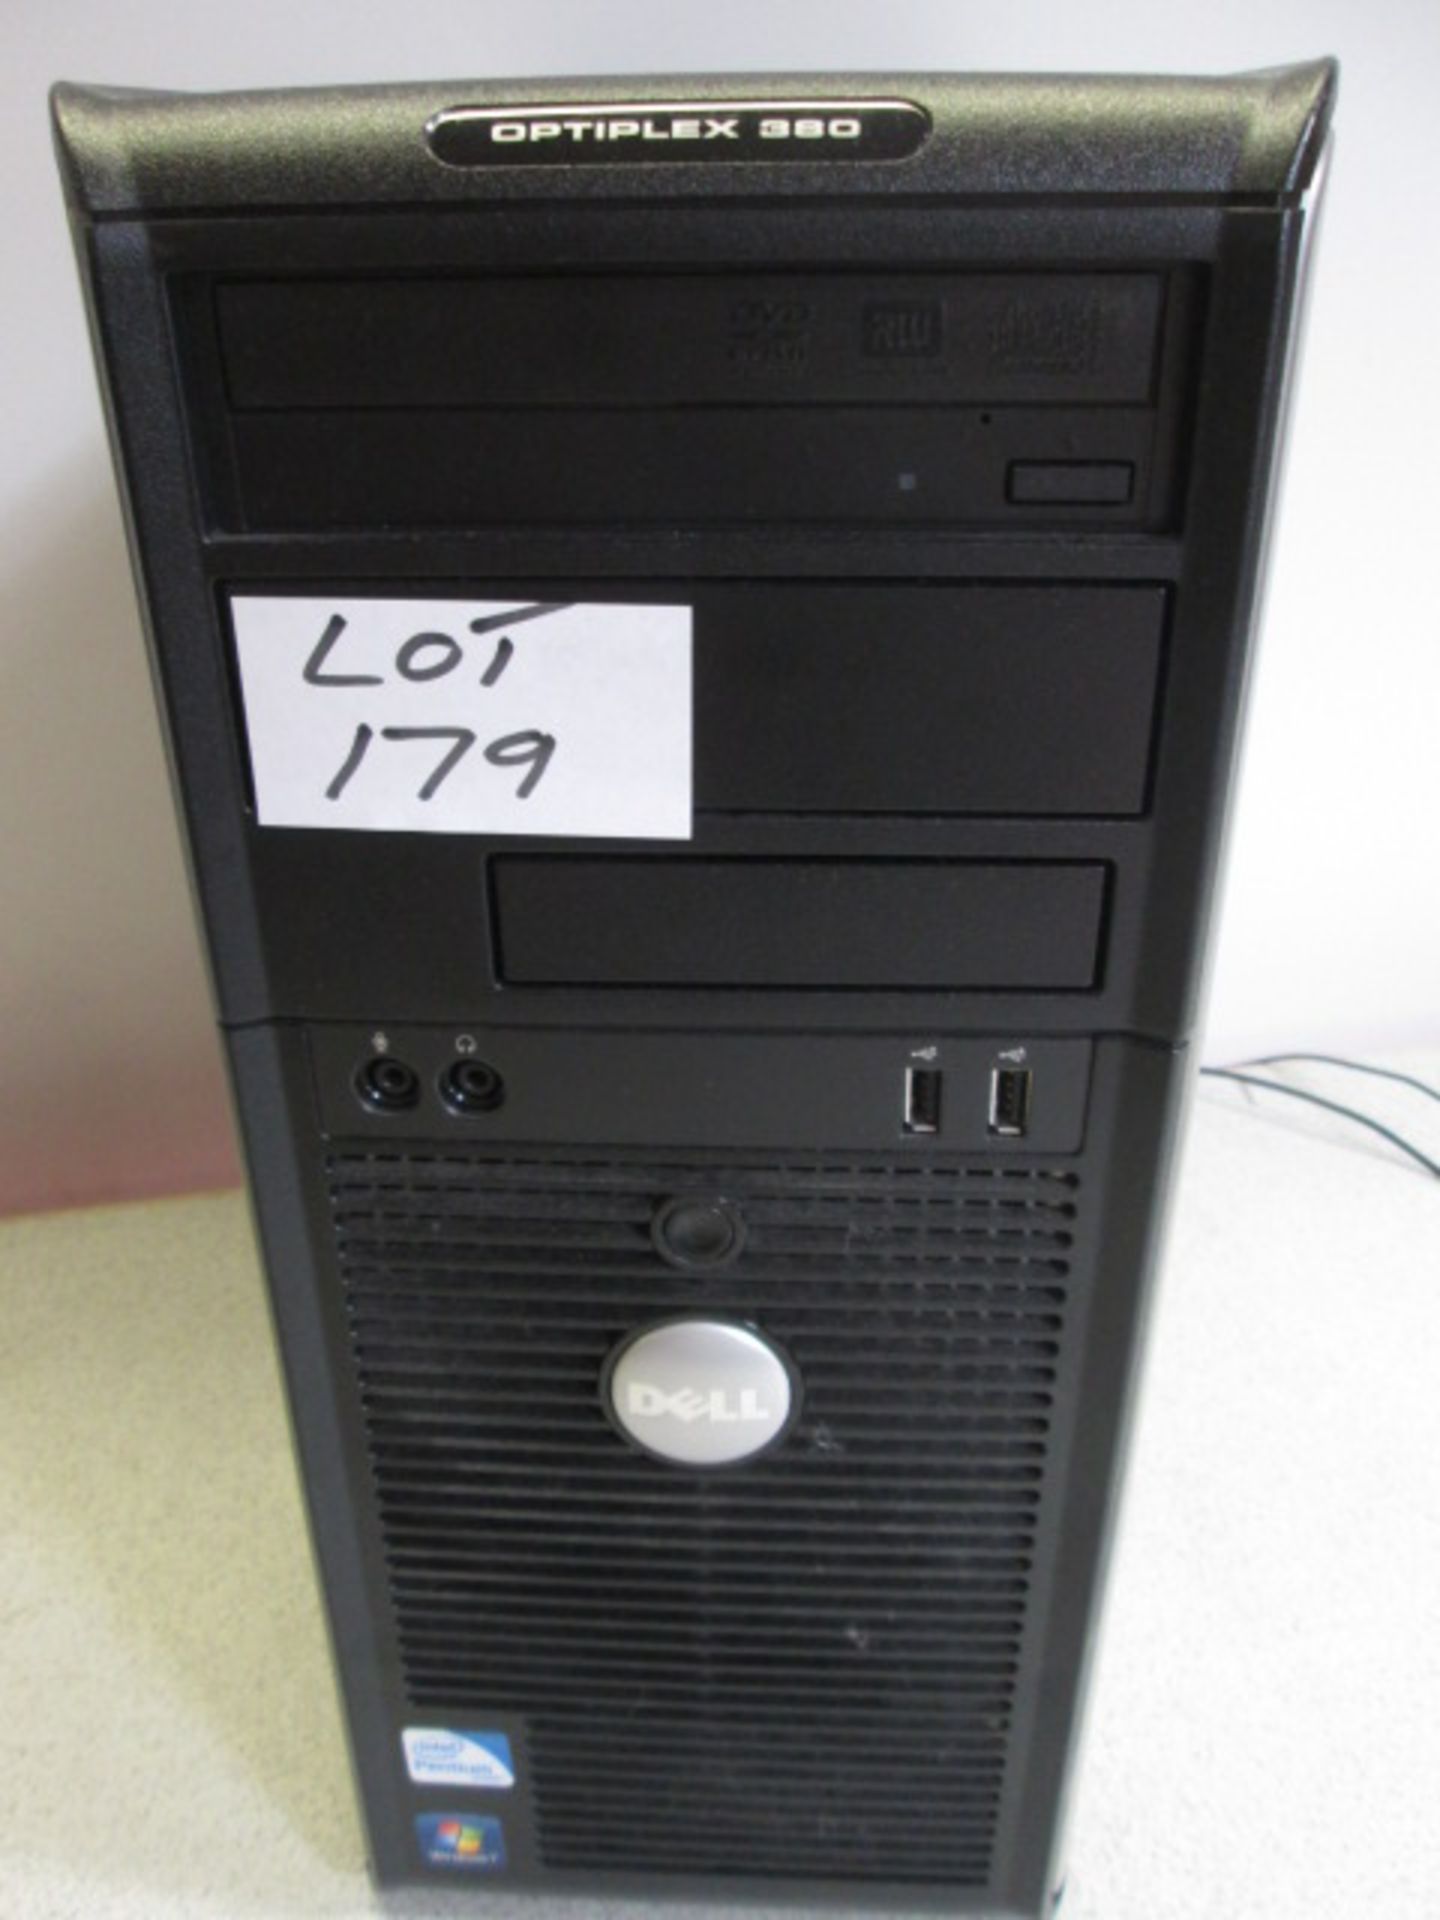 Dell Optiplex 380 PC. Intel Pentium CPU @ 2.8 GHz, 2 GB RAM, 140 GB HDD, Windows 7 Pro. Comes with - Image 2 of 2